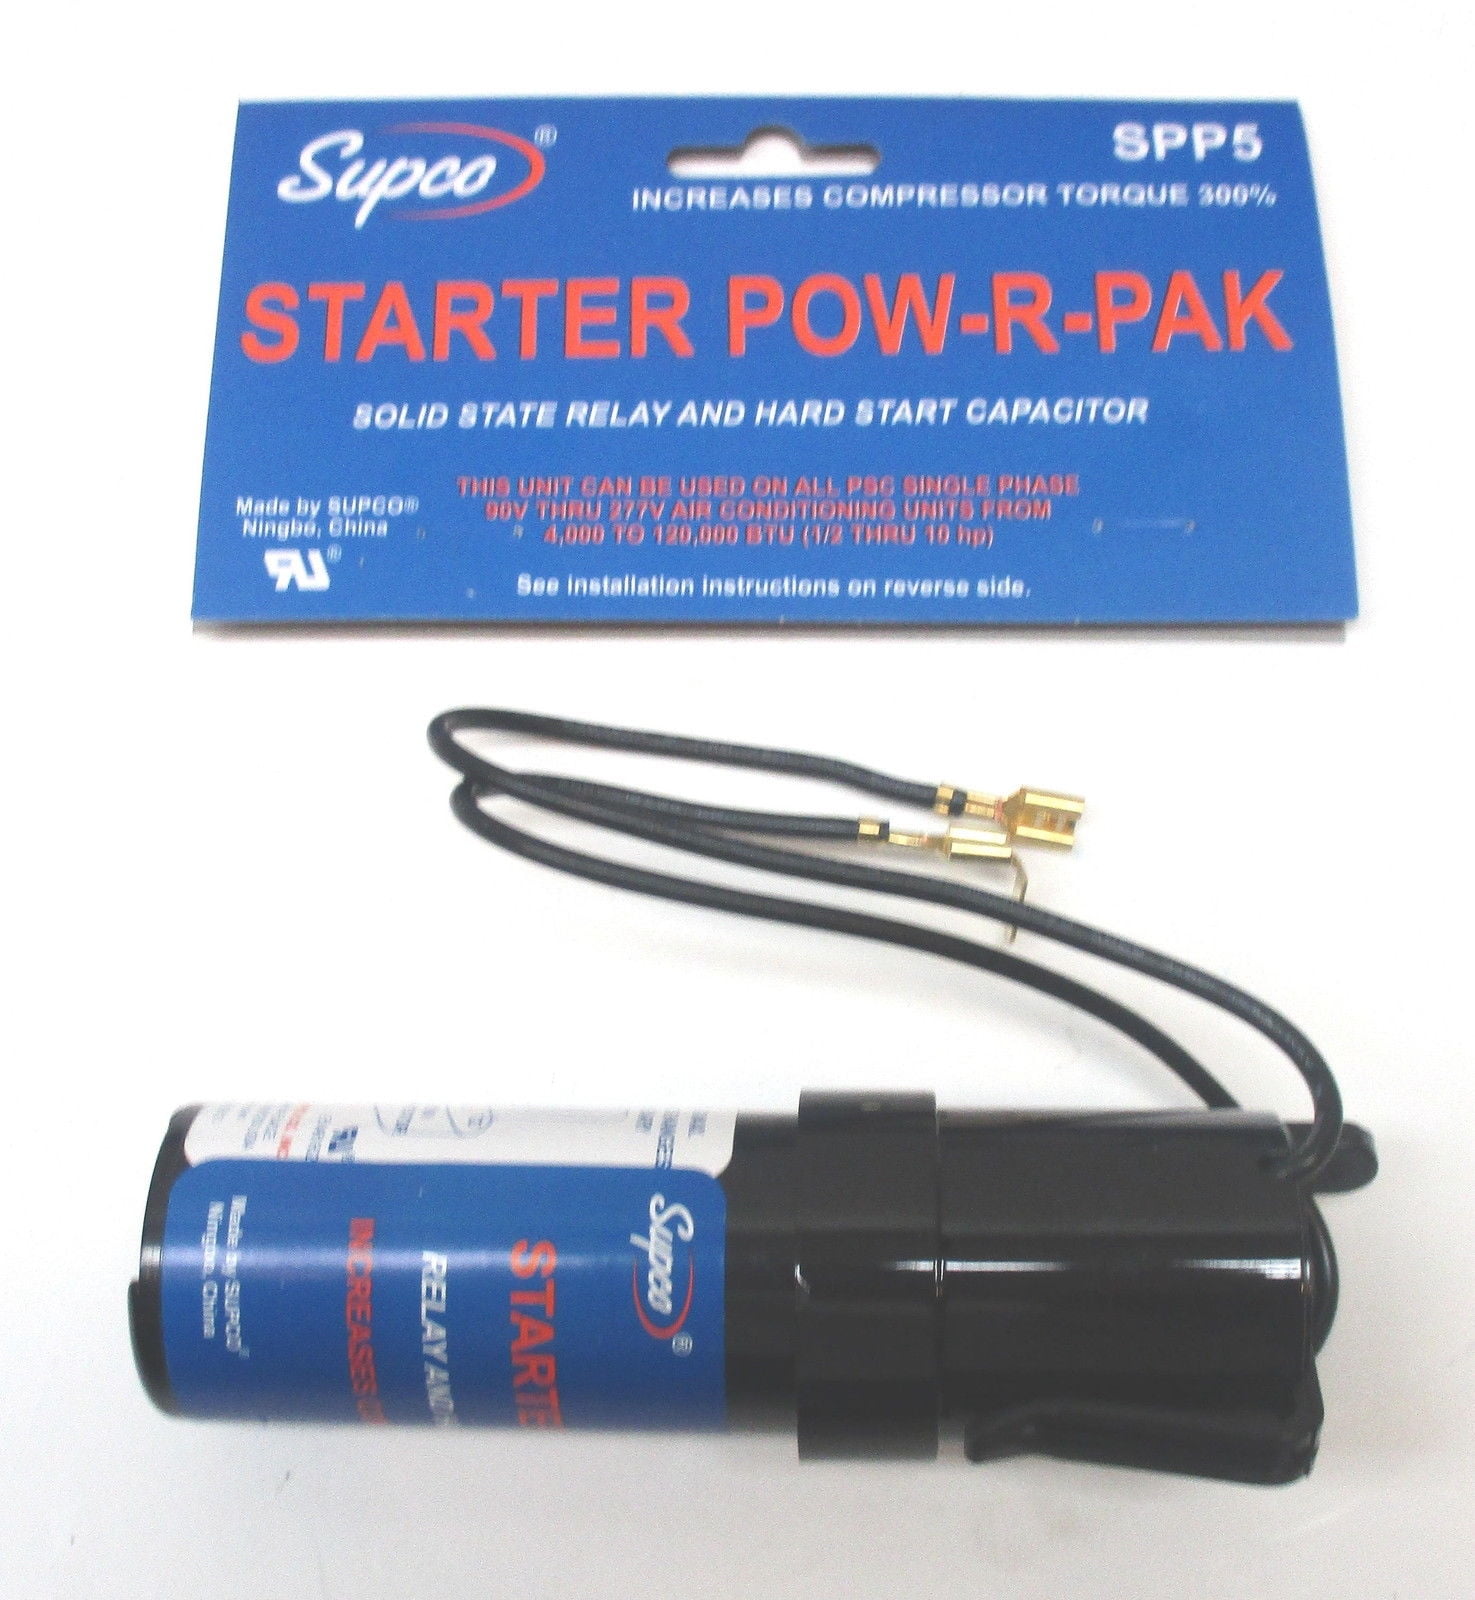 Supco Starter POW-R-PAK SPP6 hard start capacitor Relay 